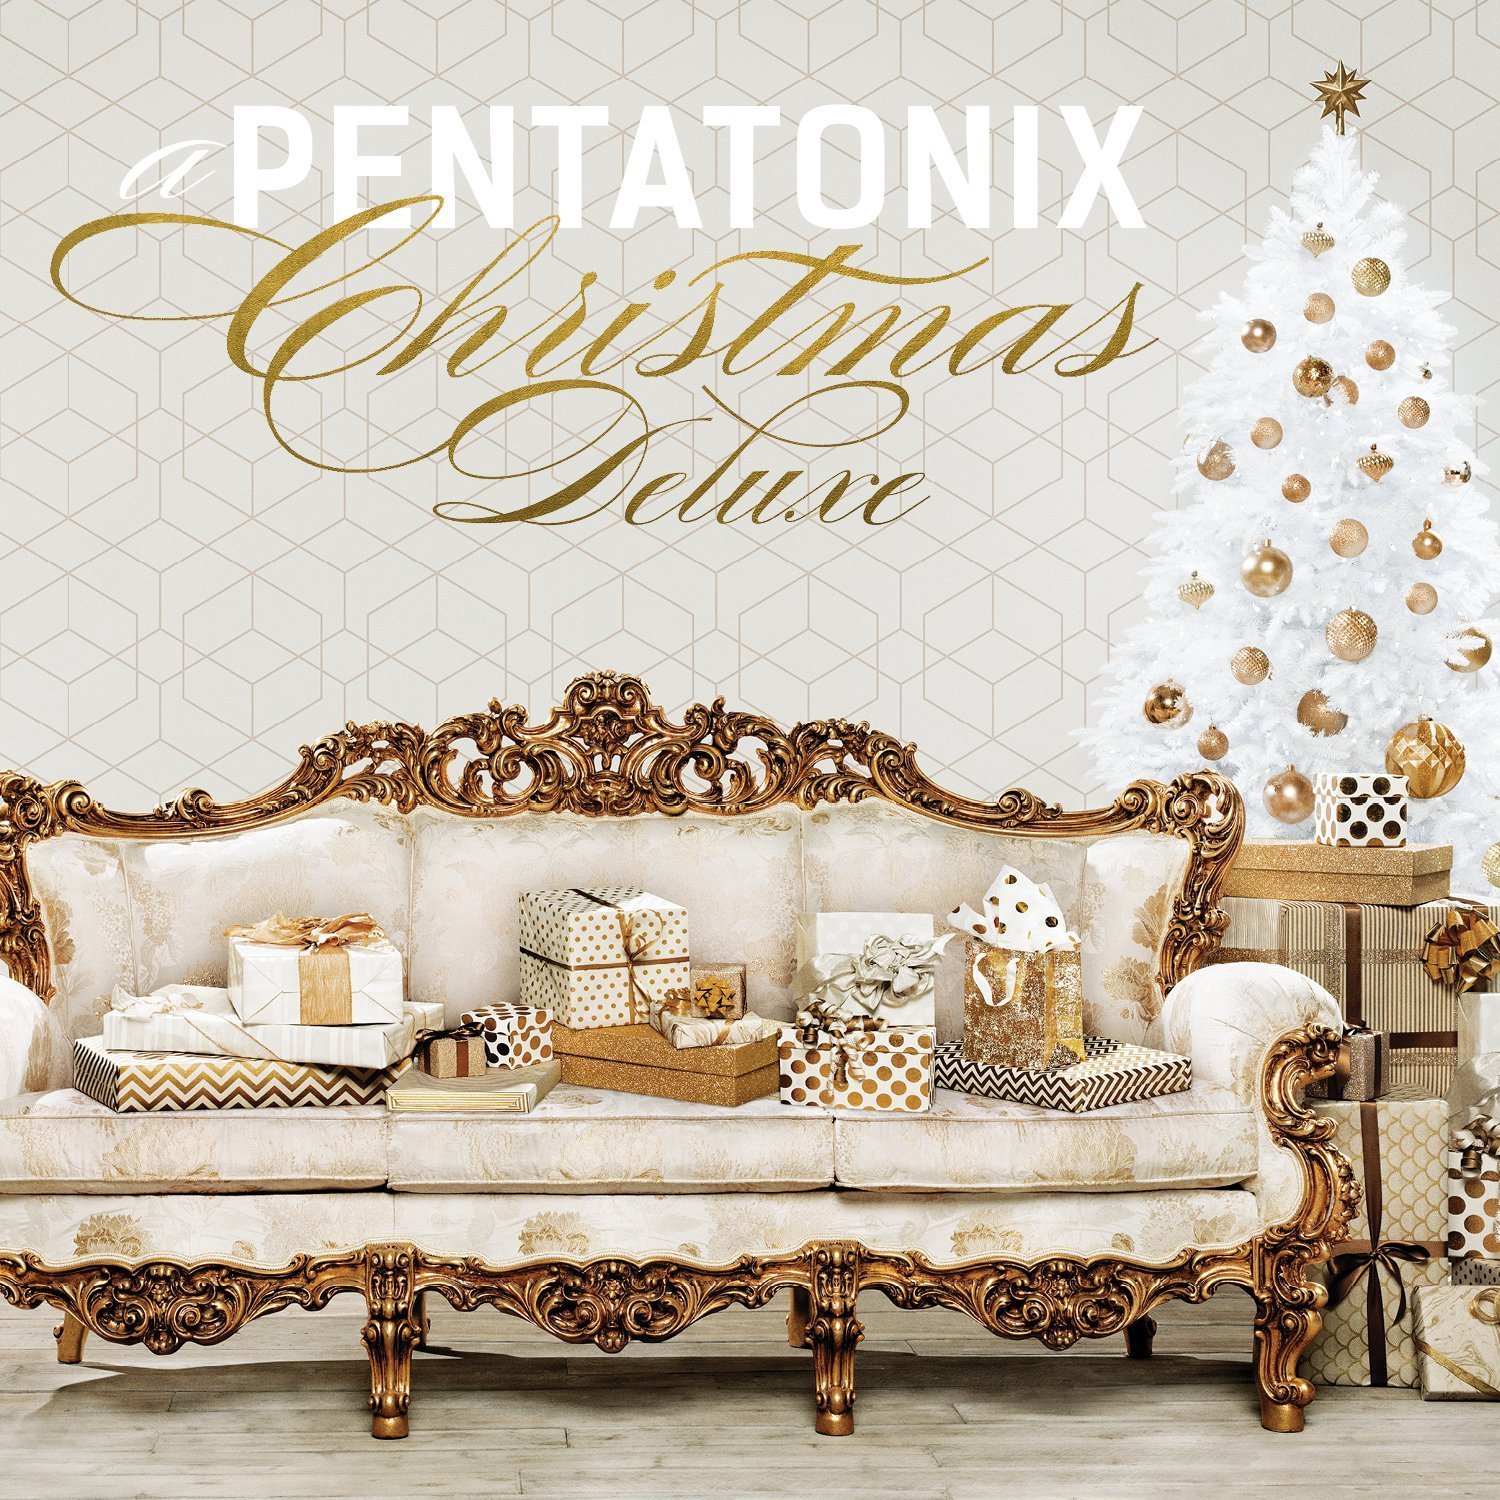 Download Pentatonix A Pentatonix Christmas (Deluxe Edition) (2017